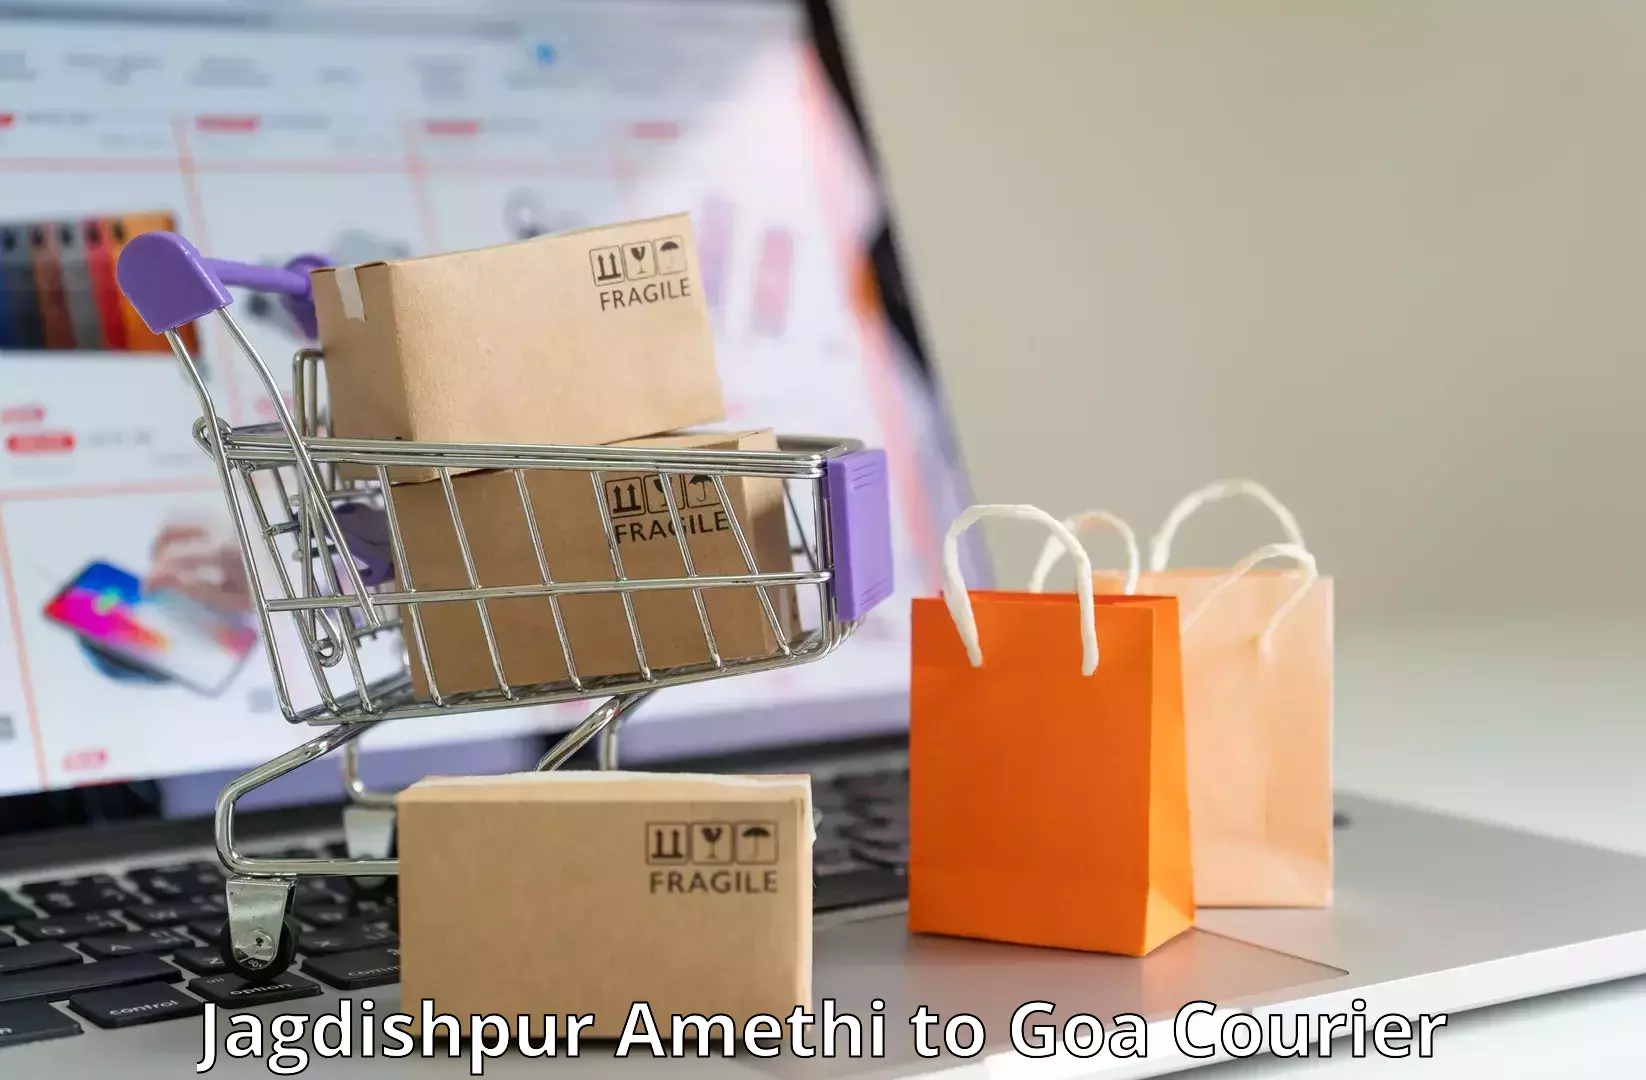 Fast delivery service Jagdishpur Amethi to Goa